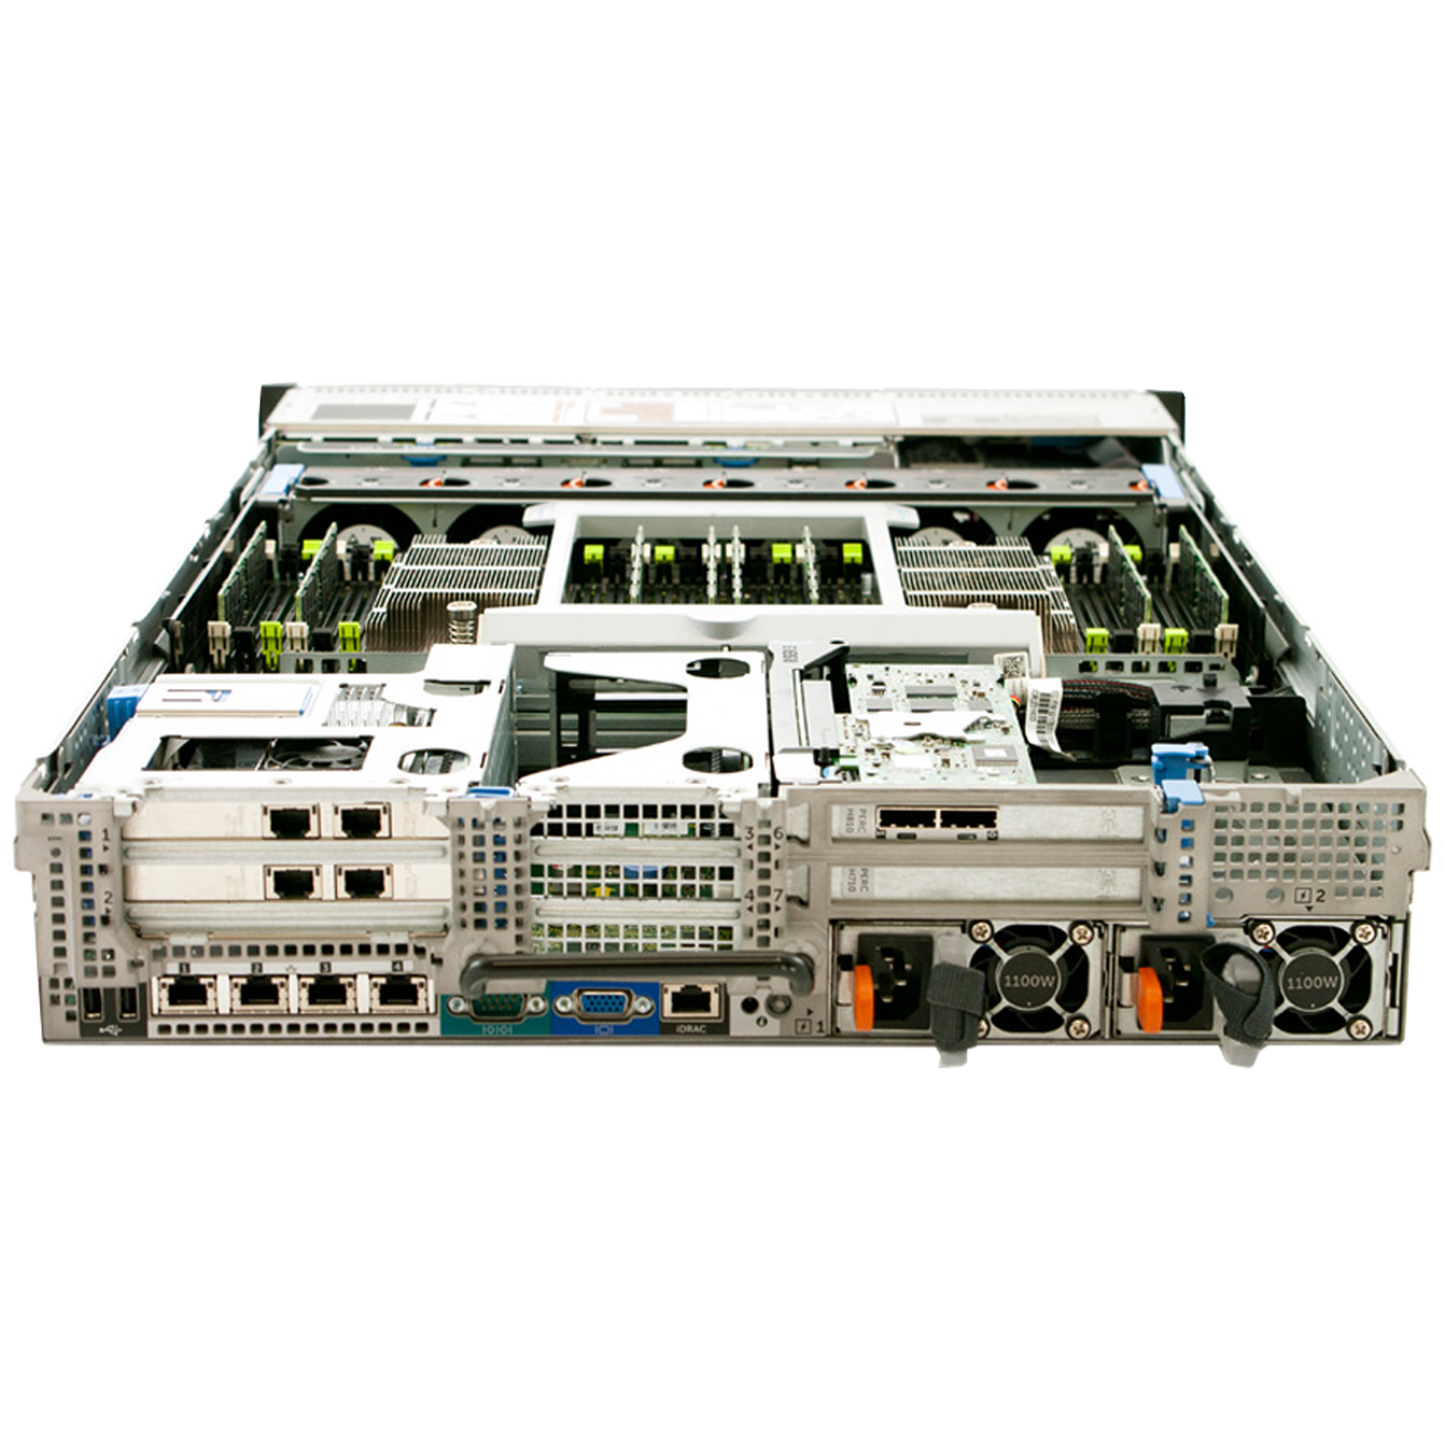 Dell PowerEdge R820 4 x 8 Core Intel Xeon CPU Server - 2.5" Backplane Servers